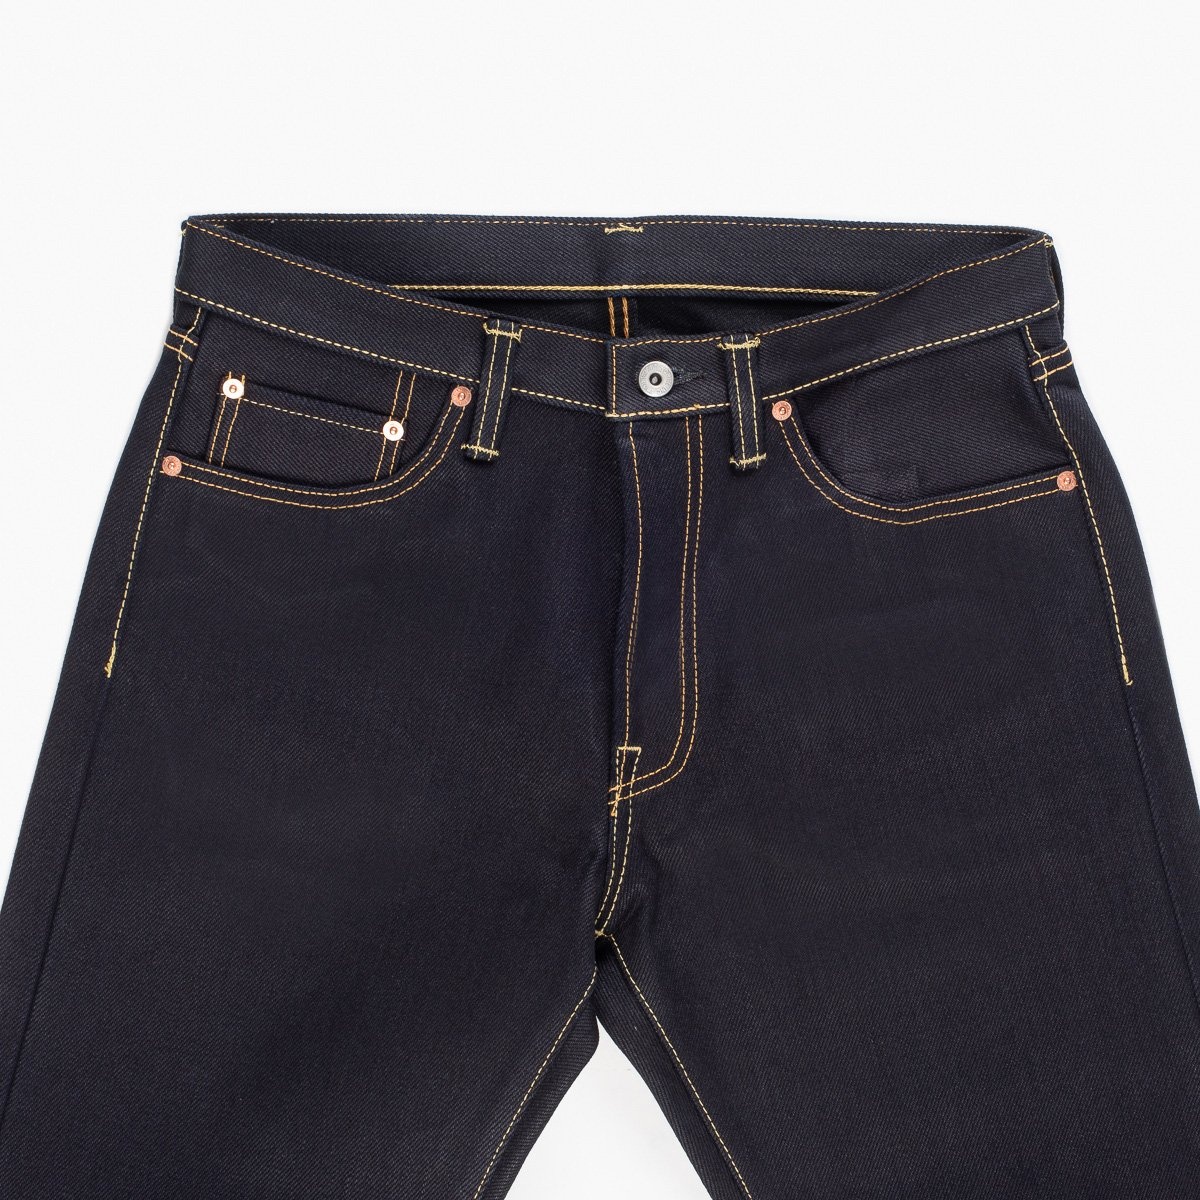 IH-634-XHSib 25oz Selvedge Denim Straight Cut Jeans - Indigo/Black - 6